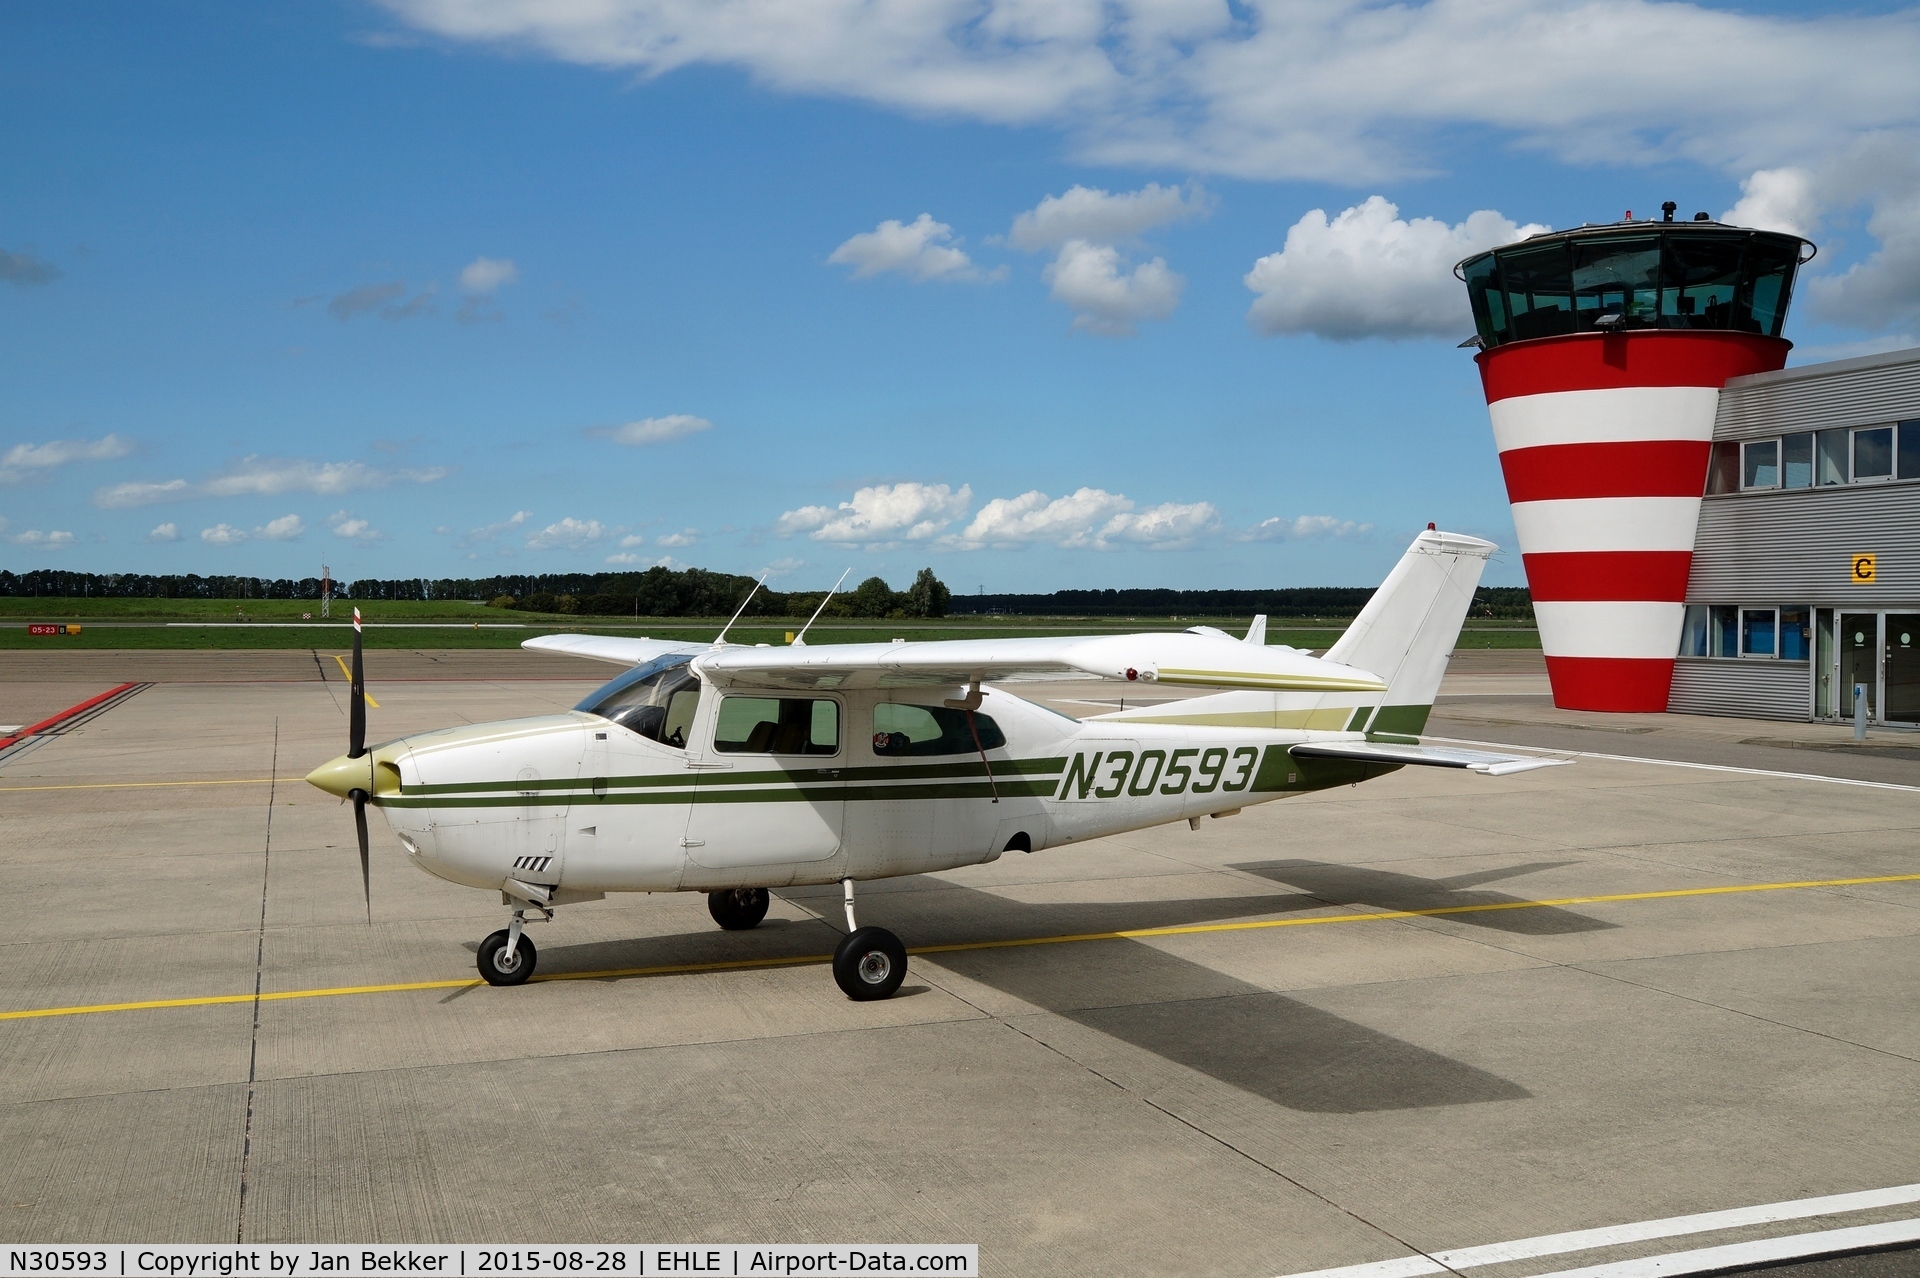 N30593, 1973 Cessna 210L Centurion C/N 21059938, Lelystad Airport